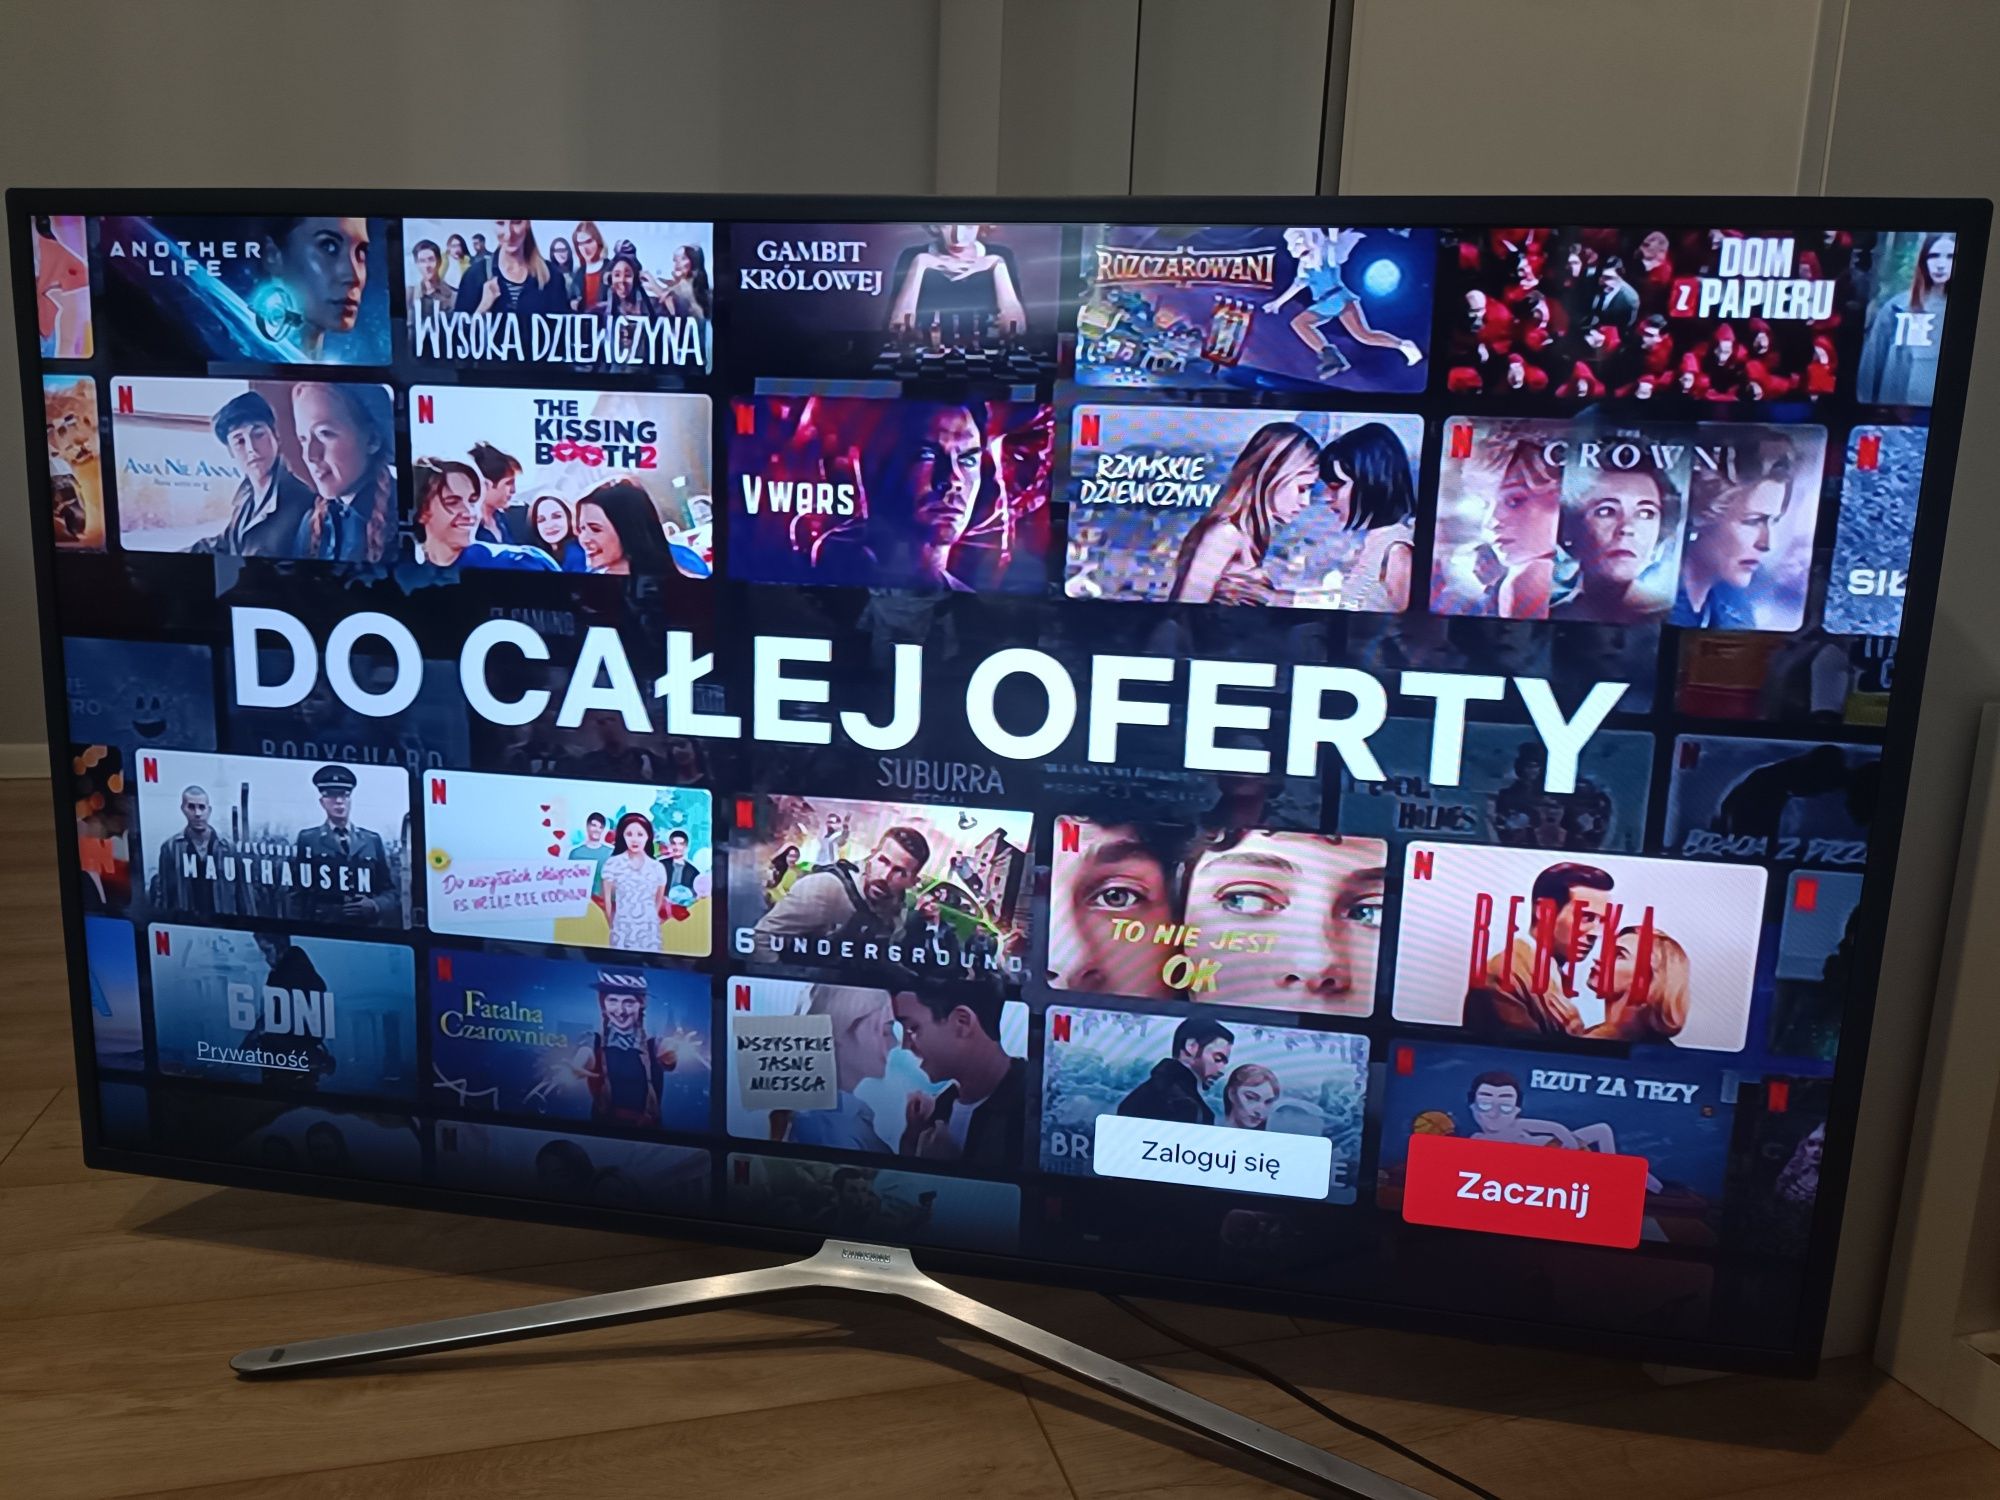 Samsung 55" Smart TV 800Hz Full HD Netflix HBO Rokuten Disney Prime